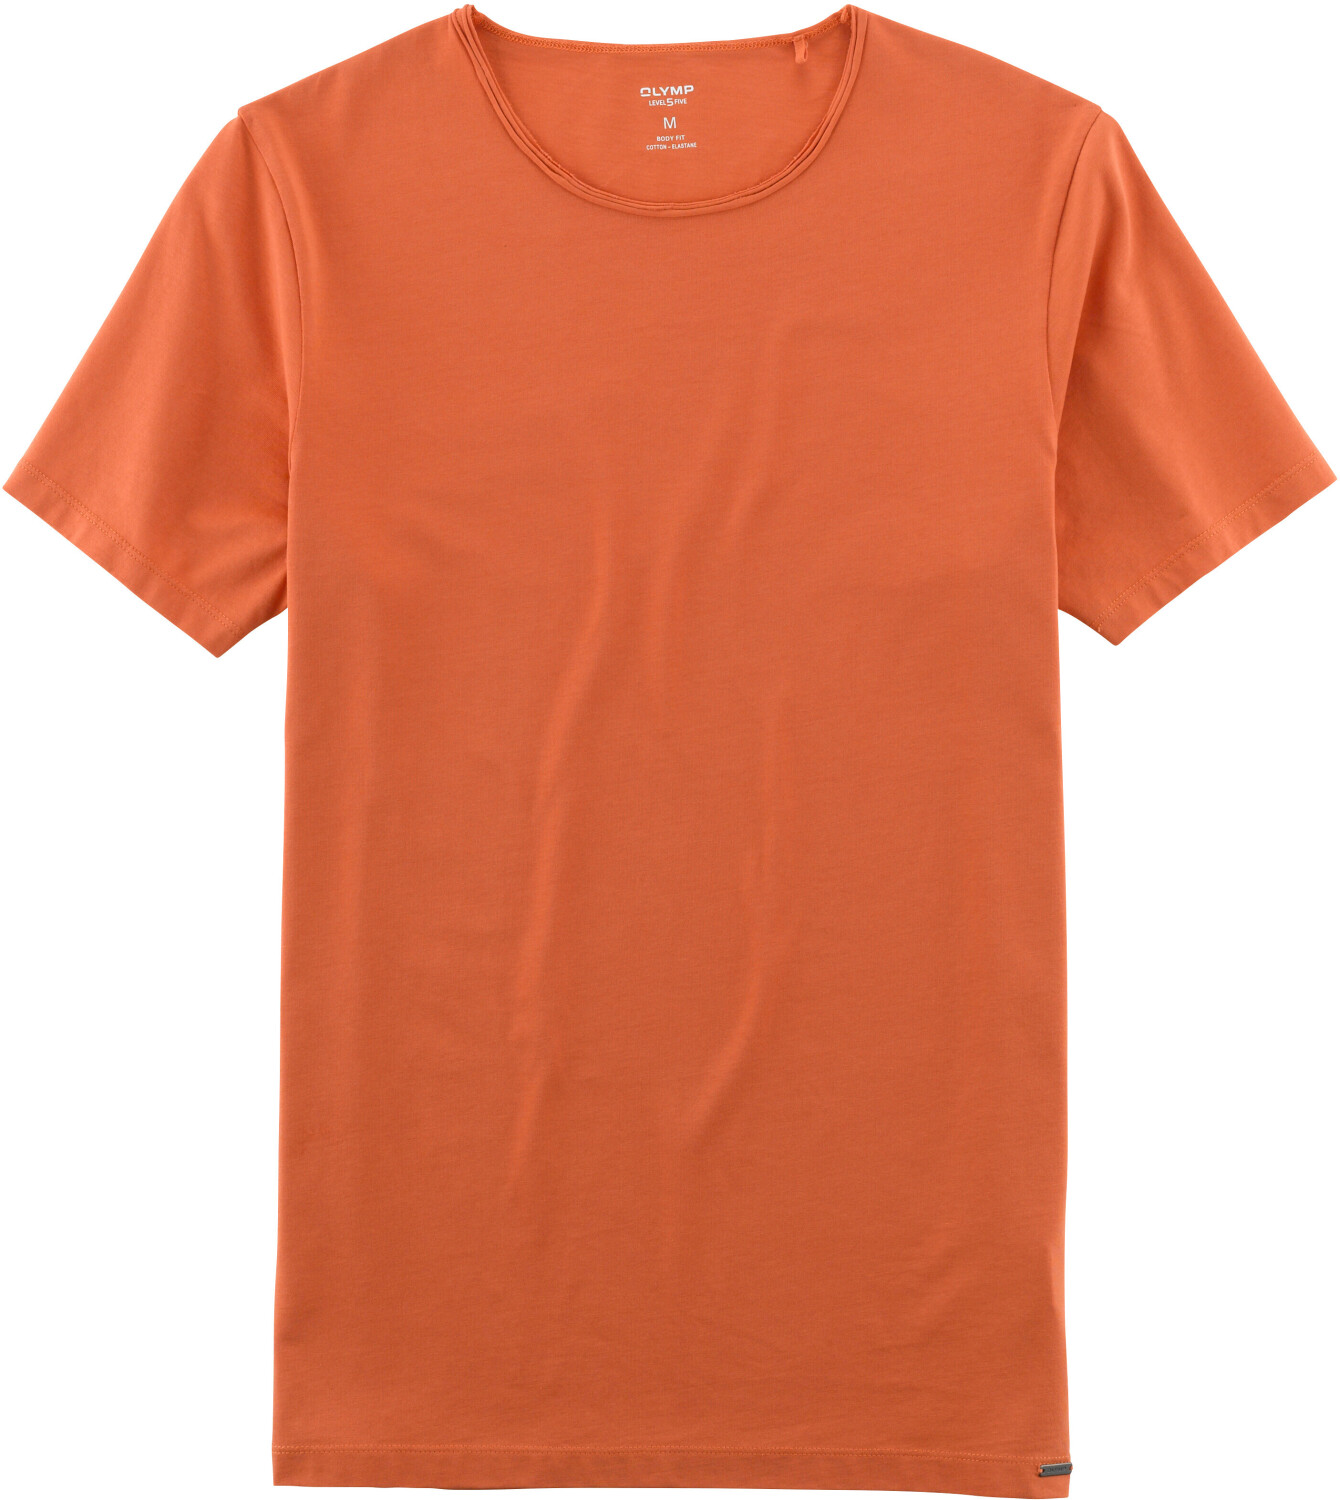 € Casual Preisvergleich (5660-32-36) ab Five OLYMP T-Shirt Body orange bei 19,95 | Fit Level